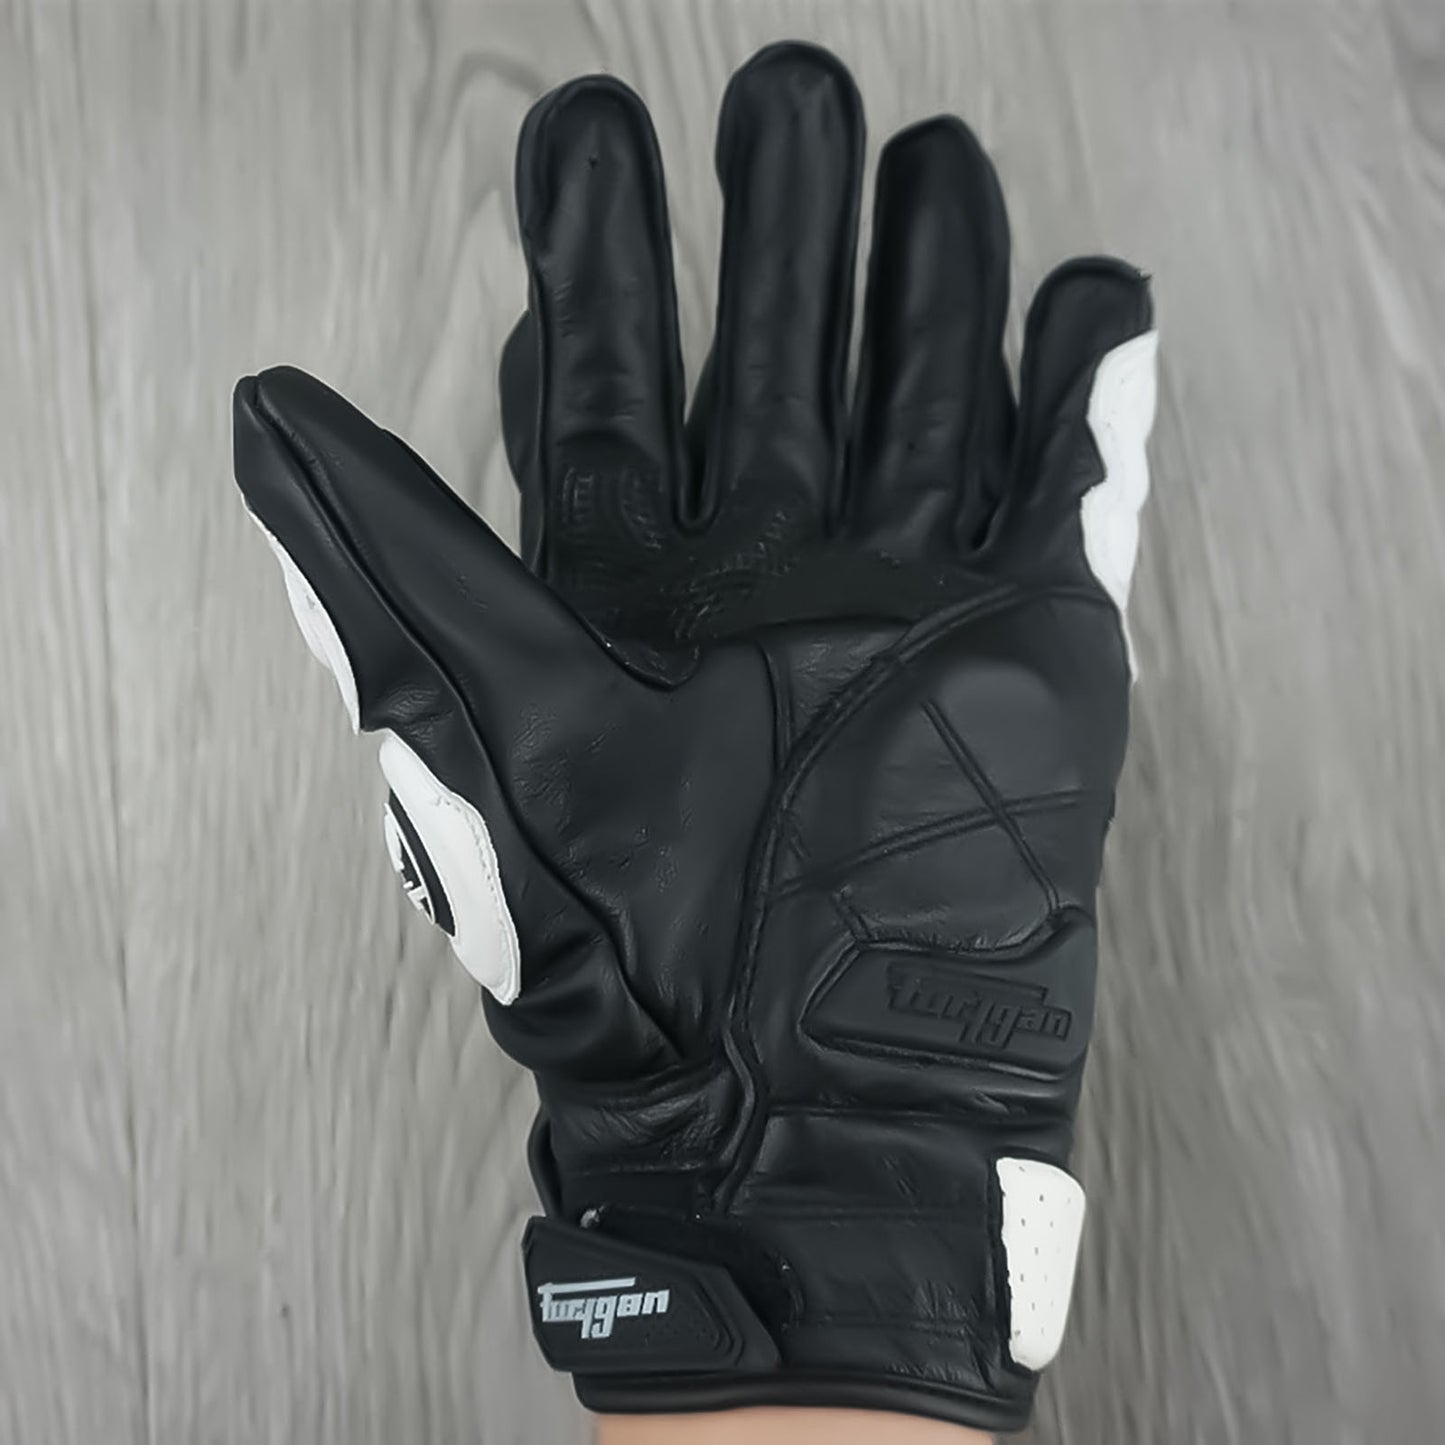 SpeedGrip-Handschuhe